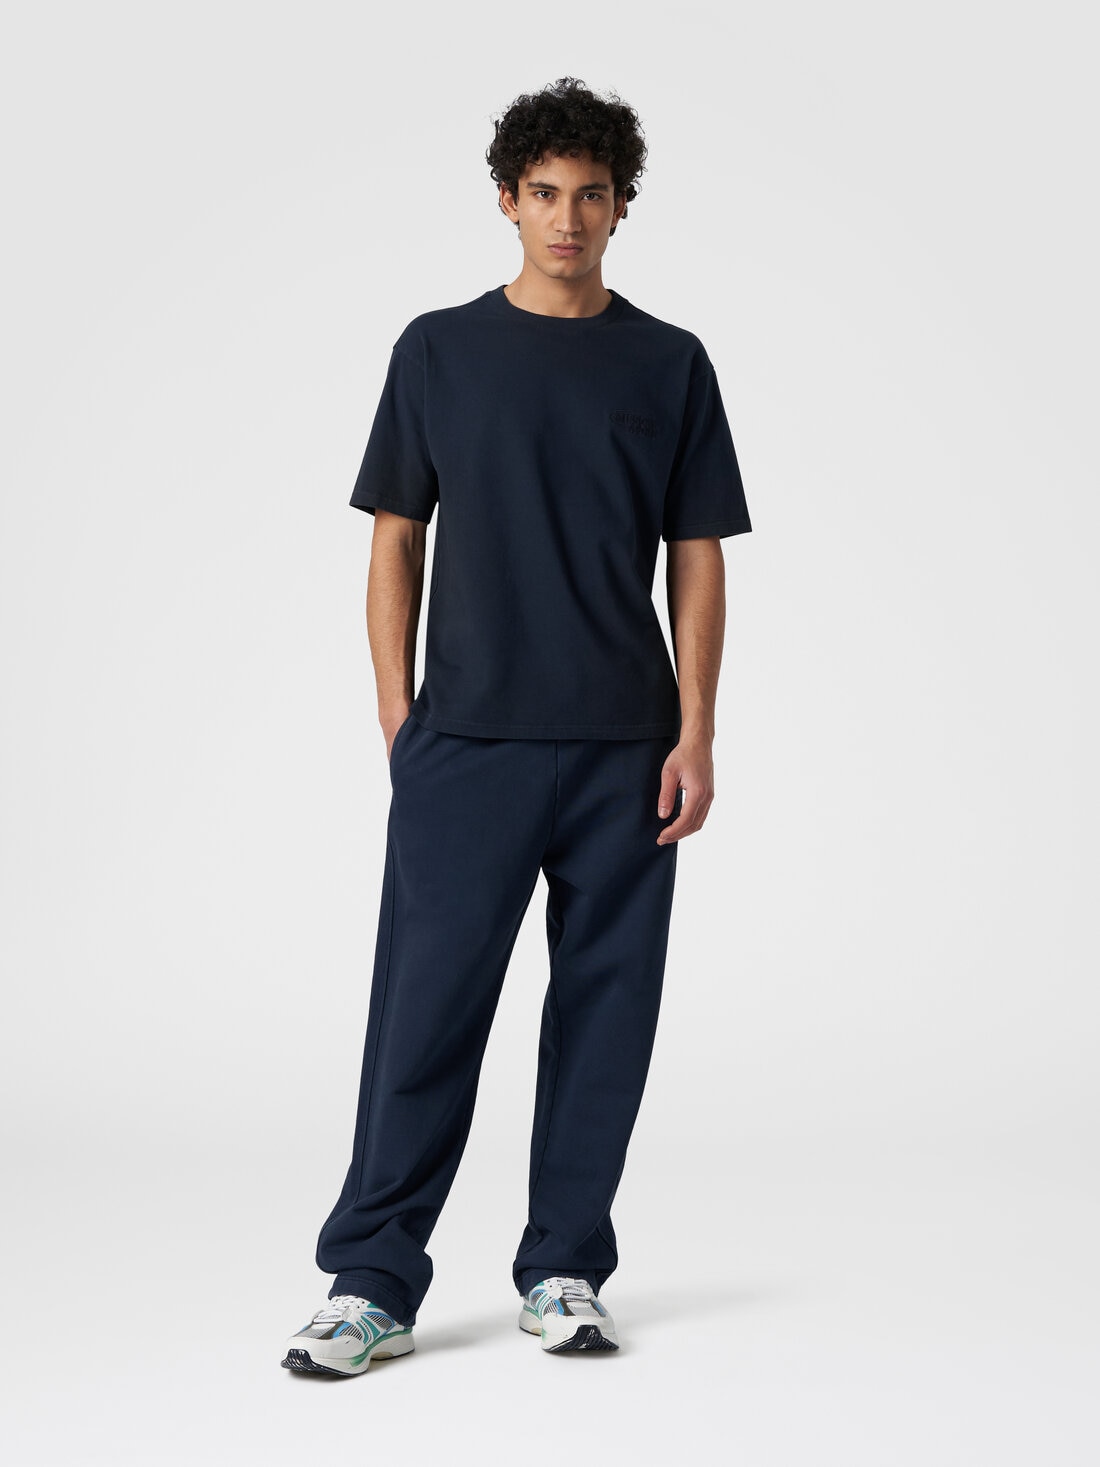 Crew-neck T-shirt in cotton with logo, Navy Blue  - TS24SL00BJ00GYS72EU - 1